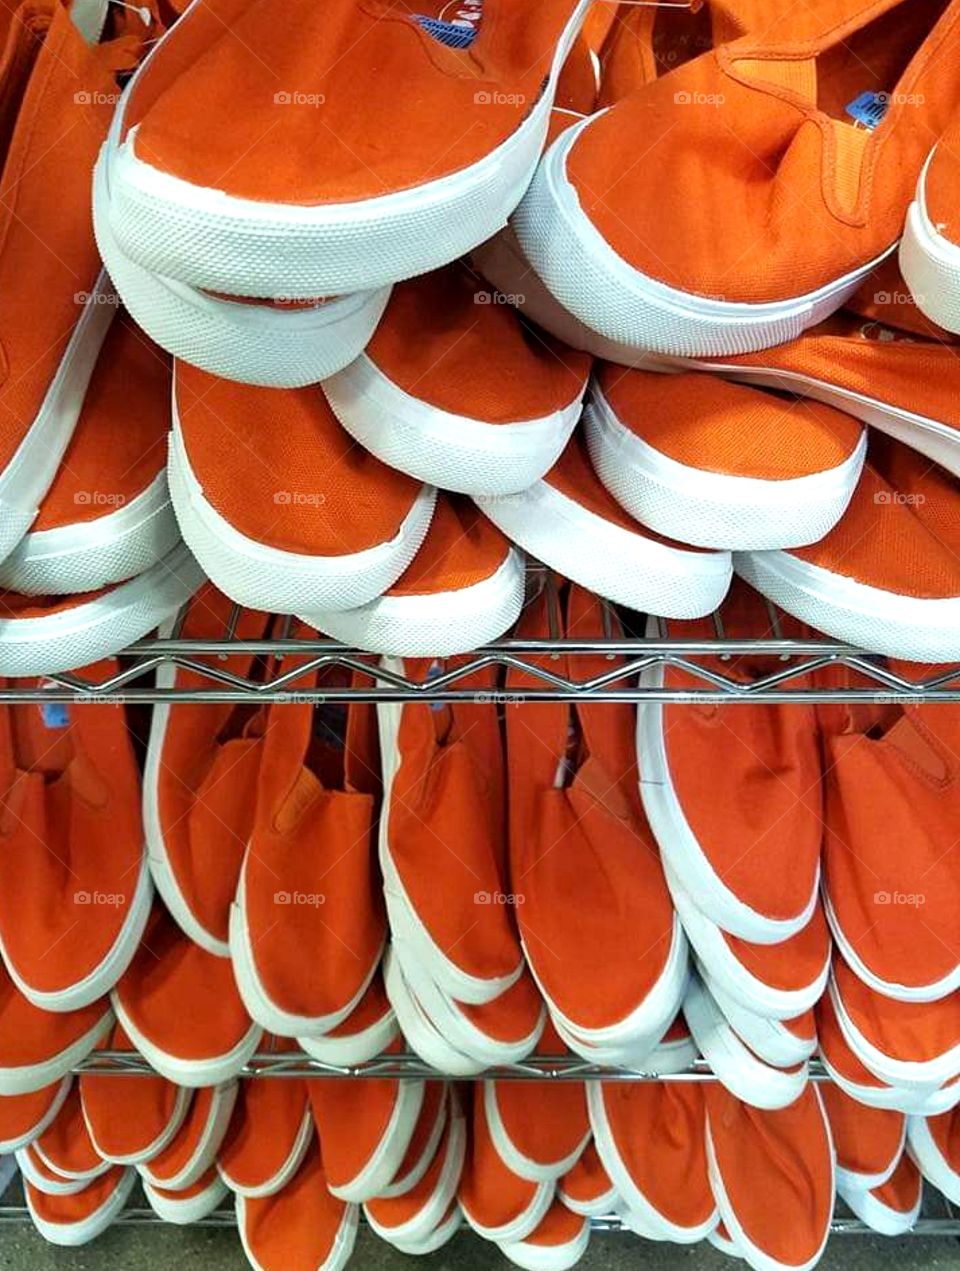 Orange shoes